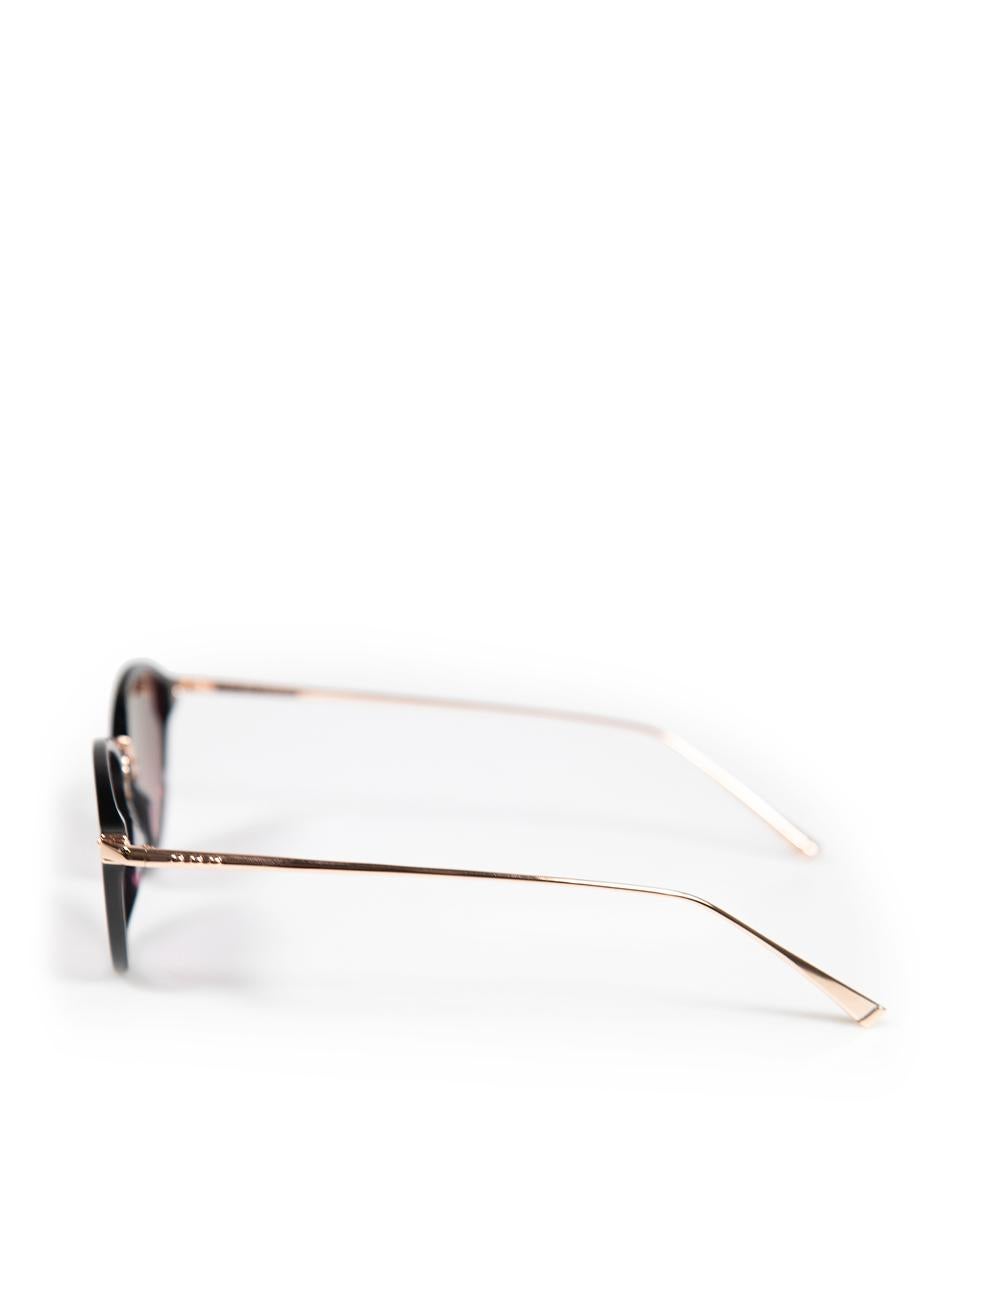 Women's Taylor Morris Black Frame Purple Lens Sunglasses For Sale